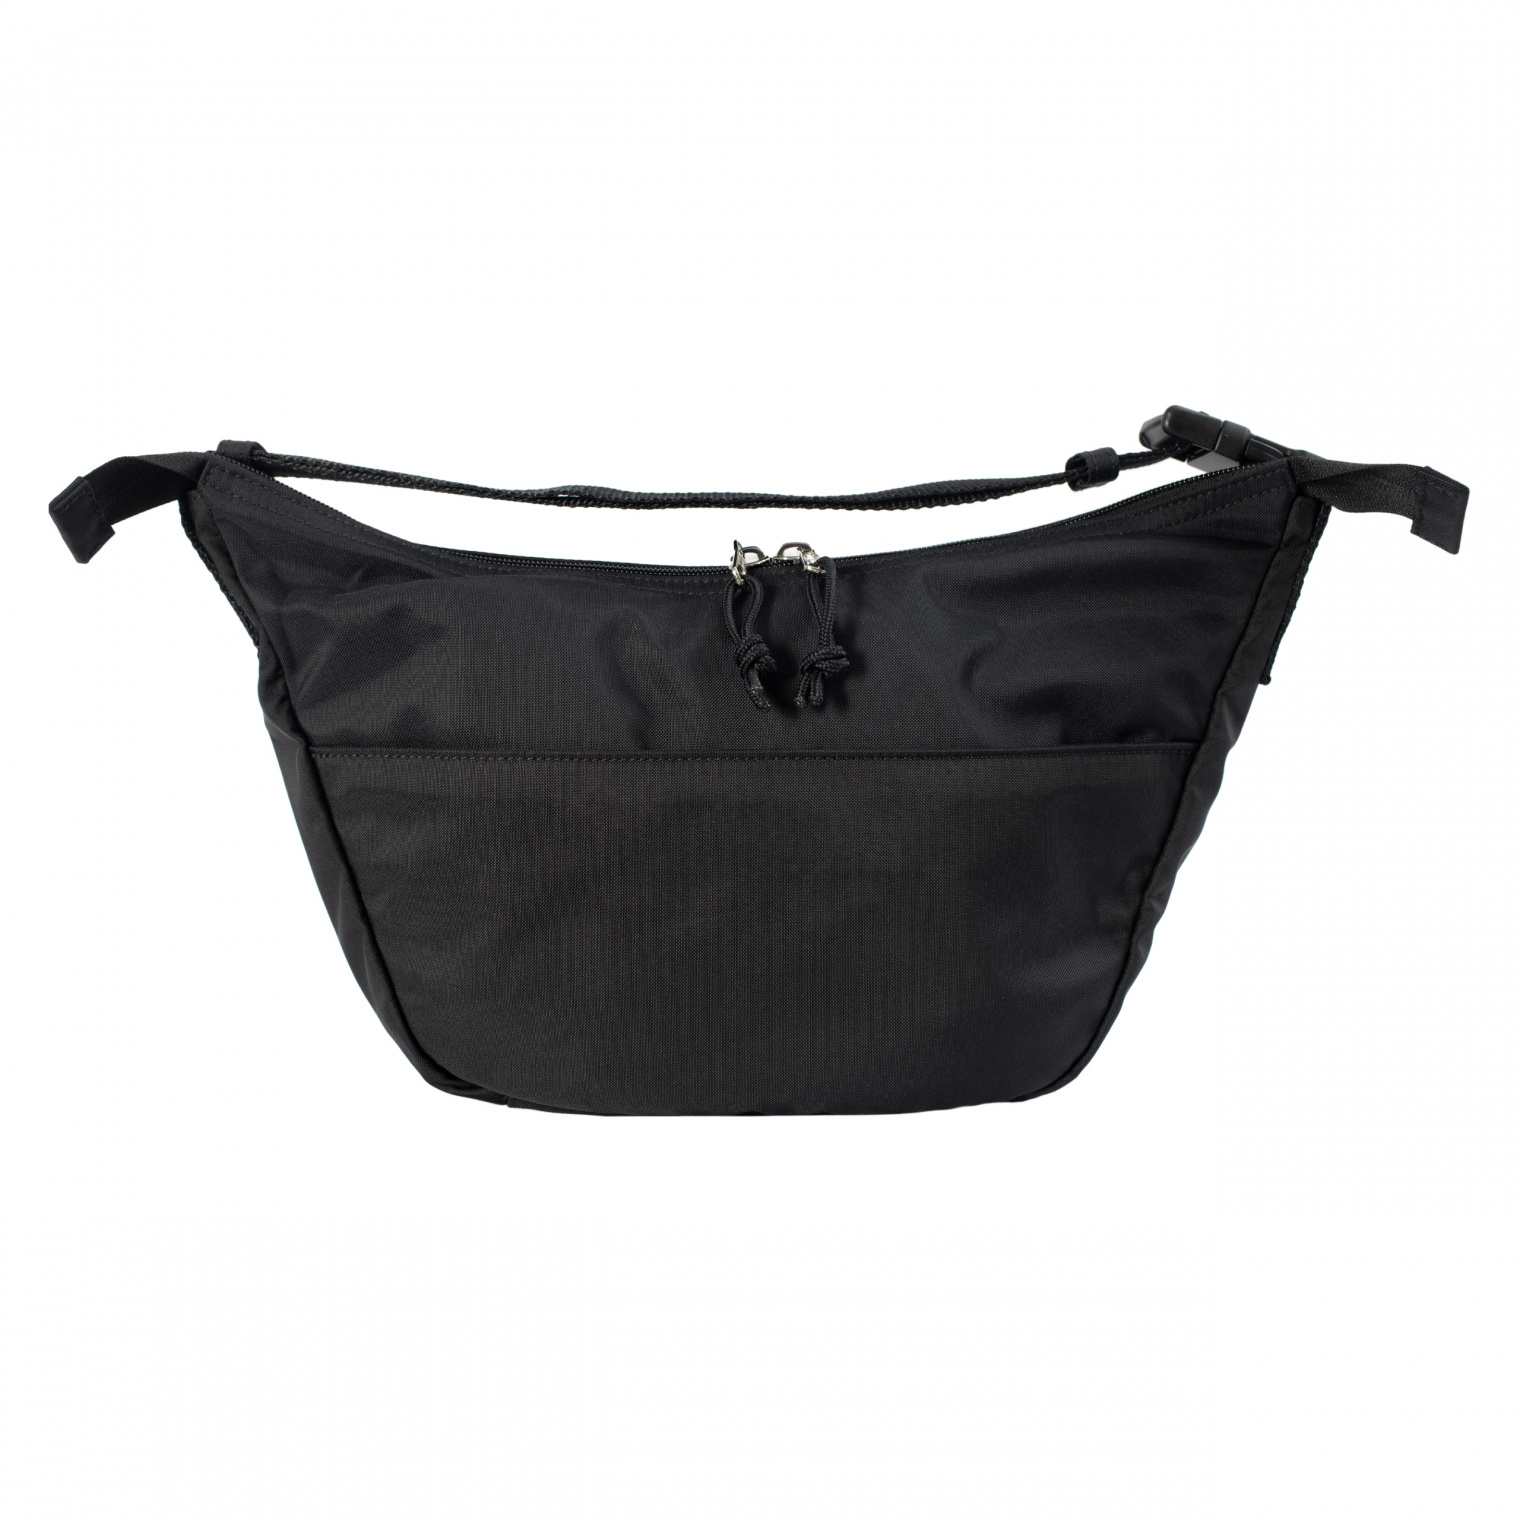 Balenciaga Wheel S Sling Bag in black